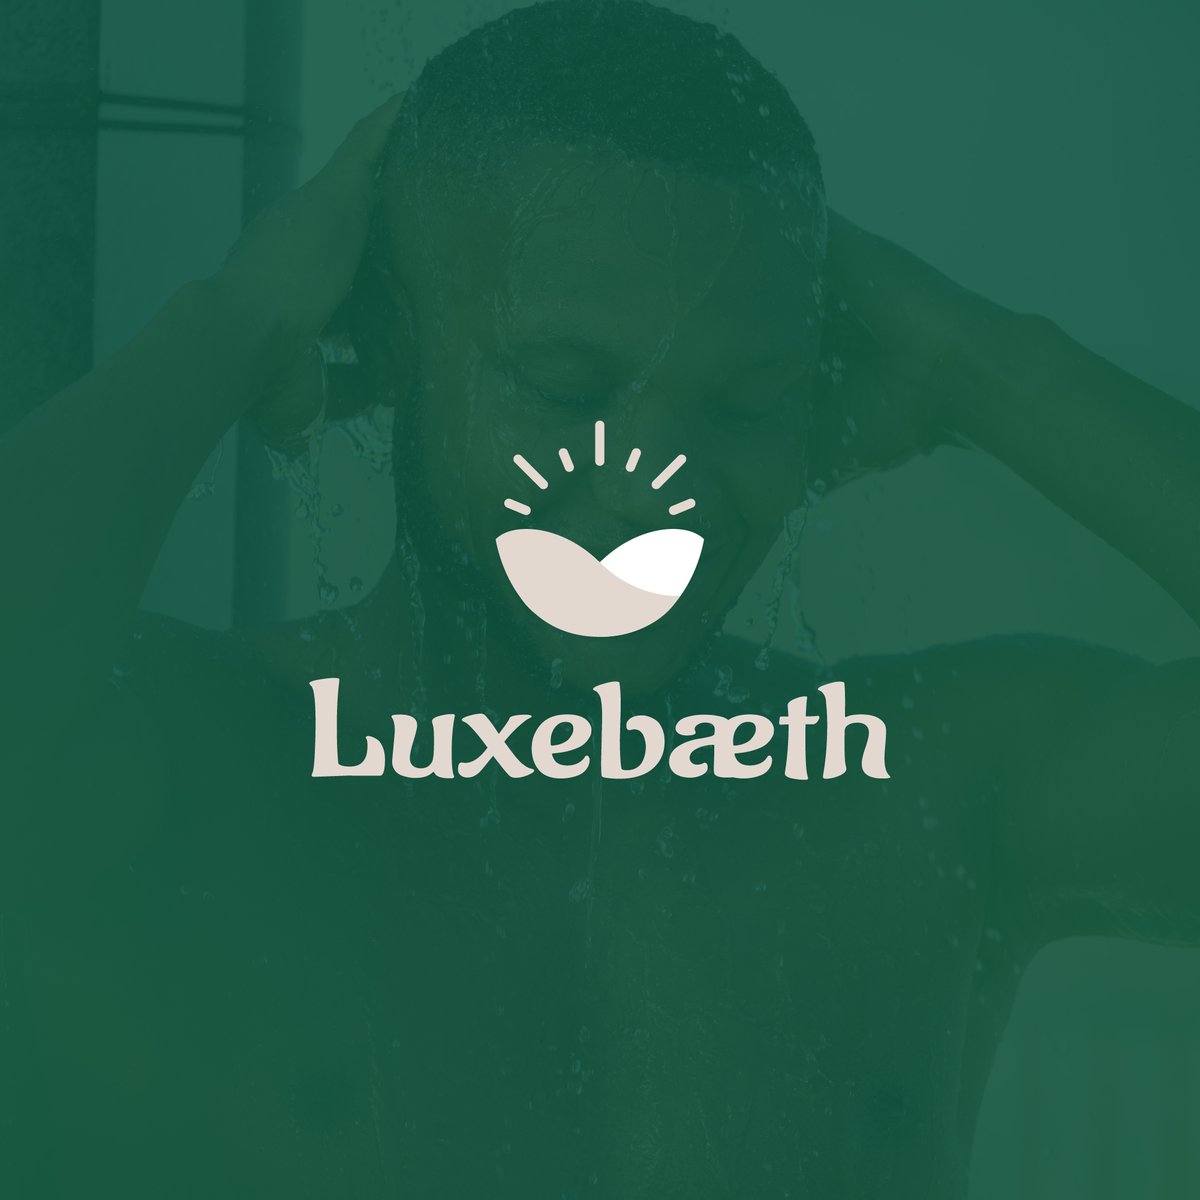 LuxeBath embodies the essence of purity, wellness, and nature while targeting health-conscious individuals seeking high-quality skincare solutions.

#visualidentitydesign #branddesign #identitydesign #skincarebrand